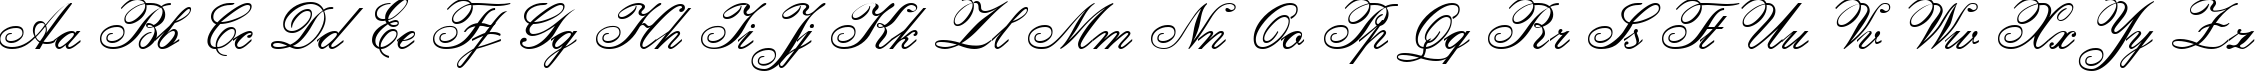 Пример написания английского алфавита шрифтом Calligraphia Two